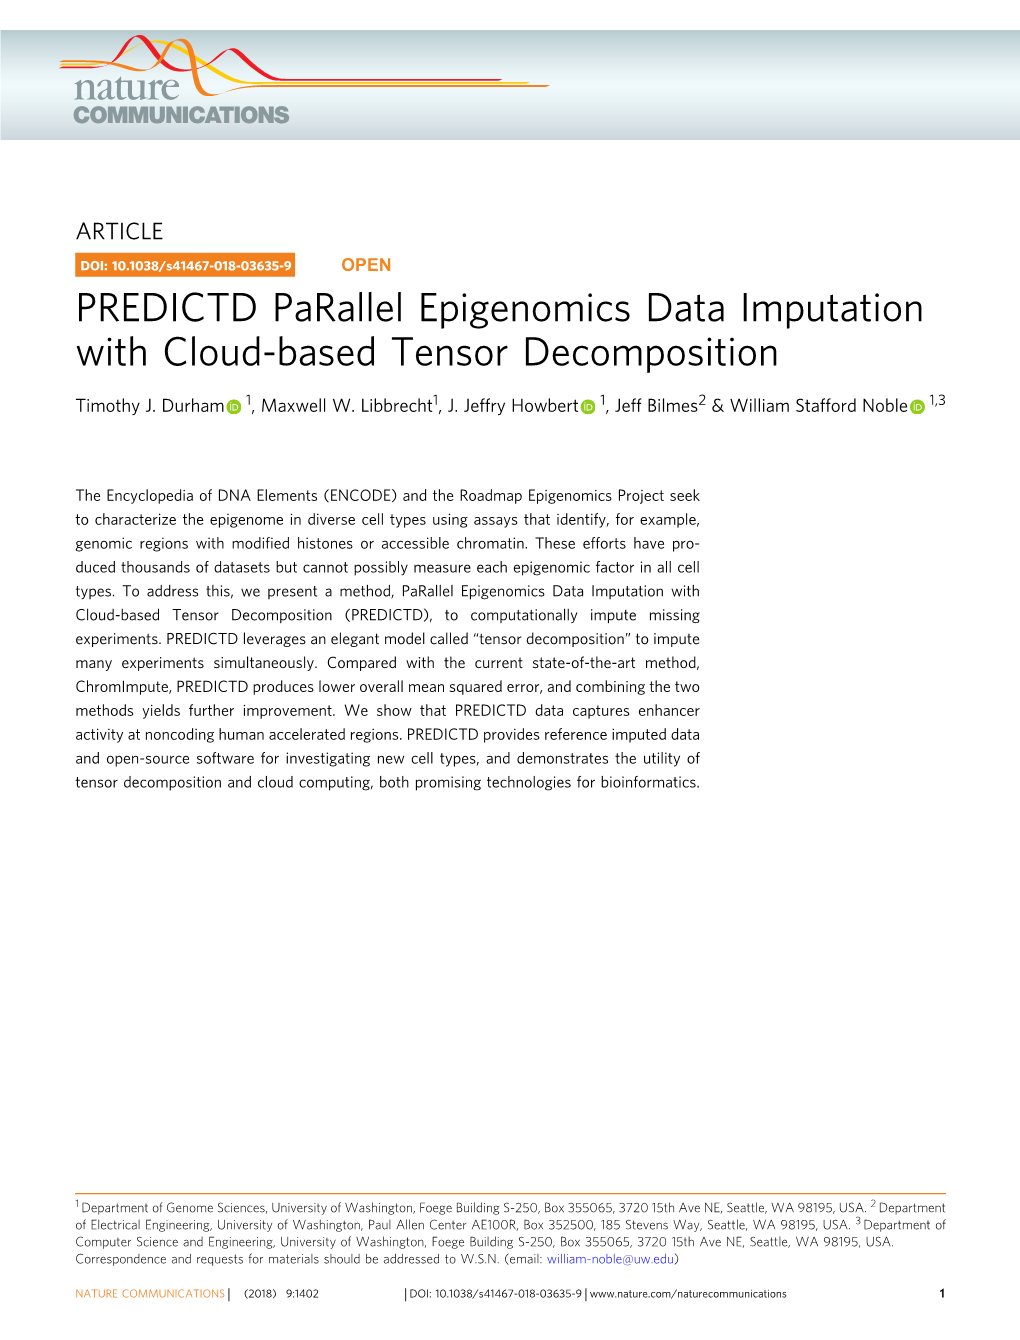 PREDICTD Parallel Epigenomics Data Imputation with Cloud-Based Tensor Decomposition